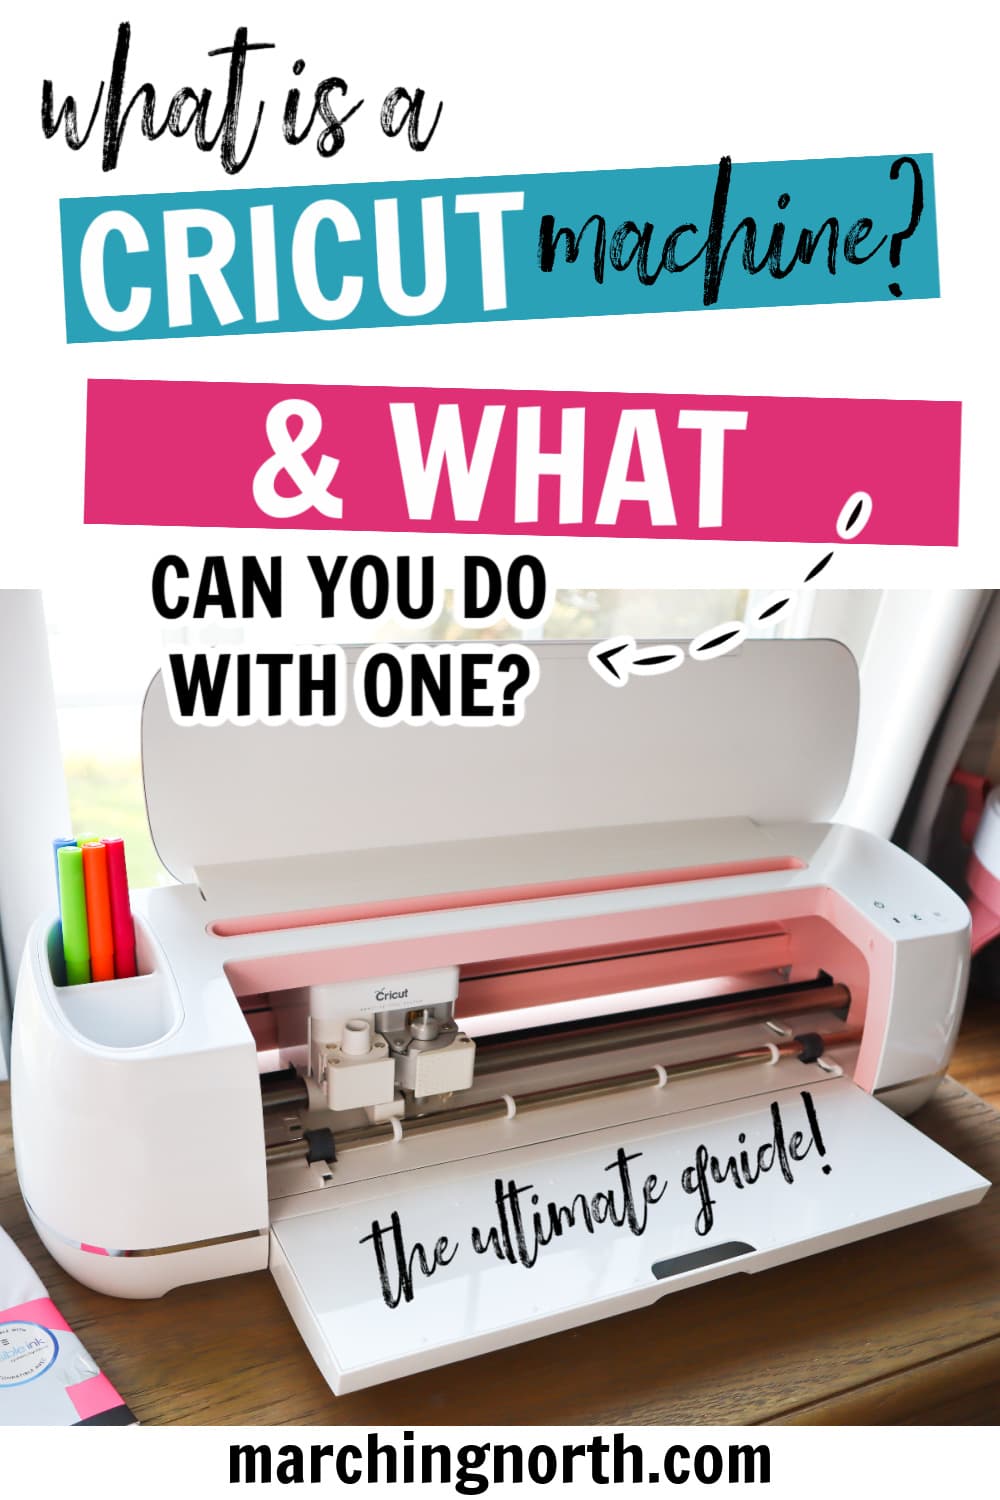 Cricut Joy Xtra Ultimate Guide to the Latest Cricut Cutting Machine -  Jennifer Maker